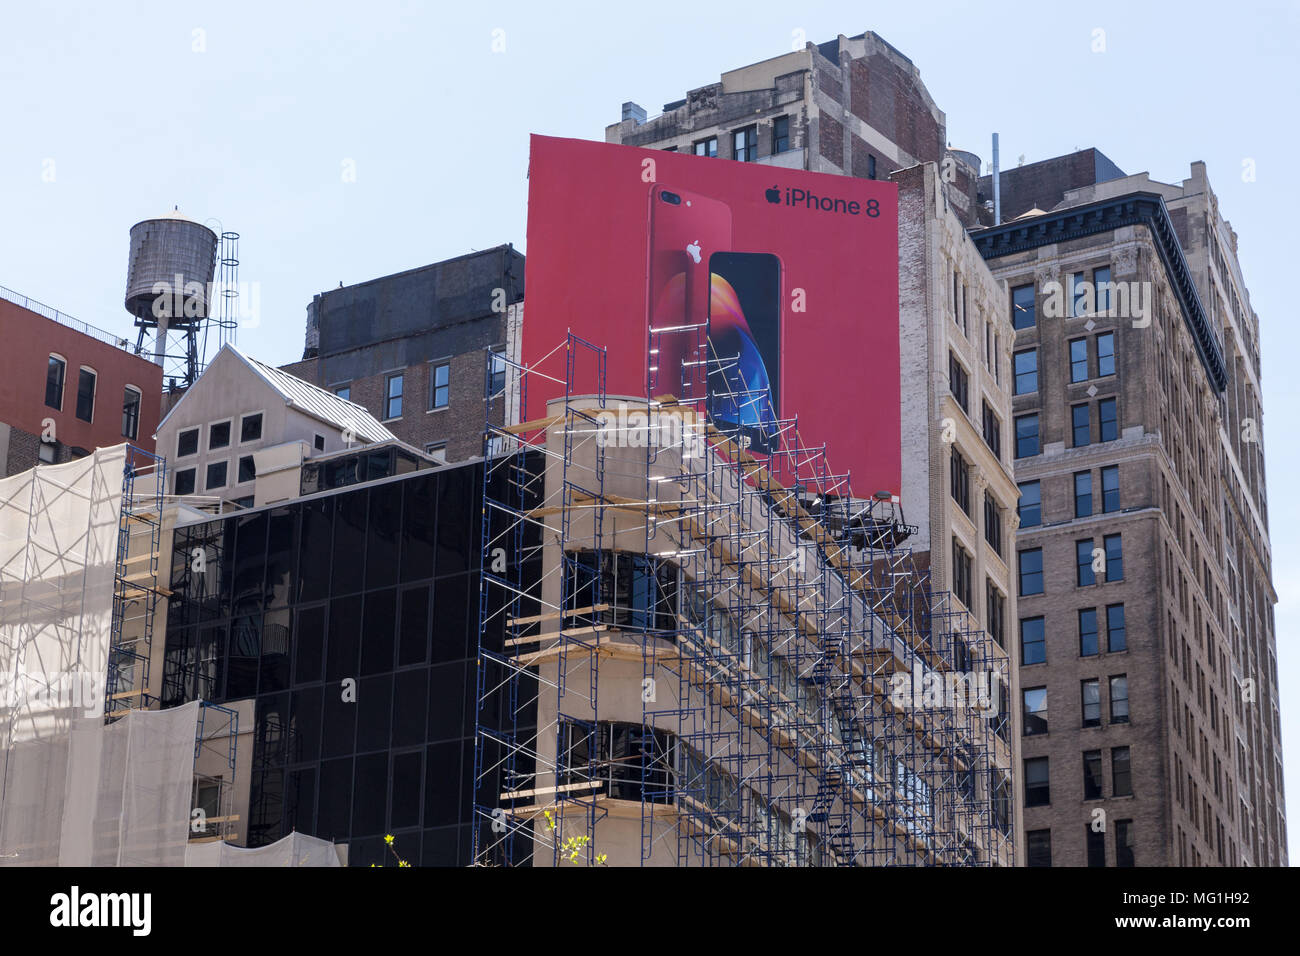 iPhone 8 Billboard in New York City Stock Photo